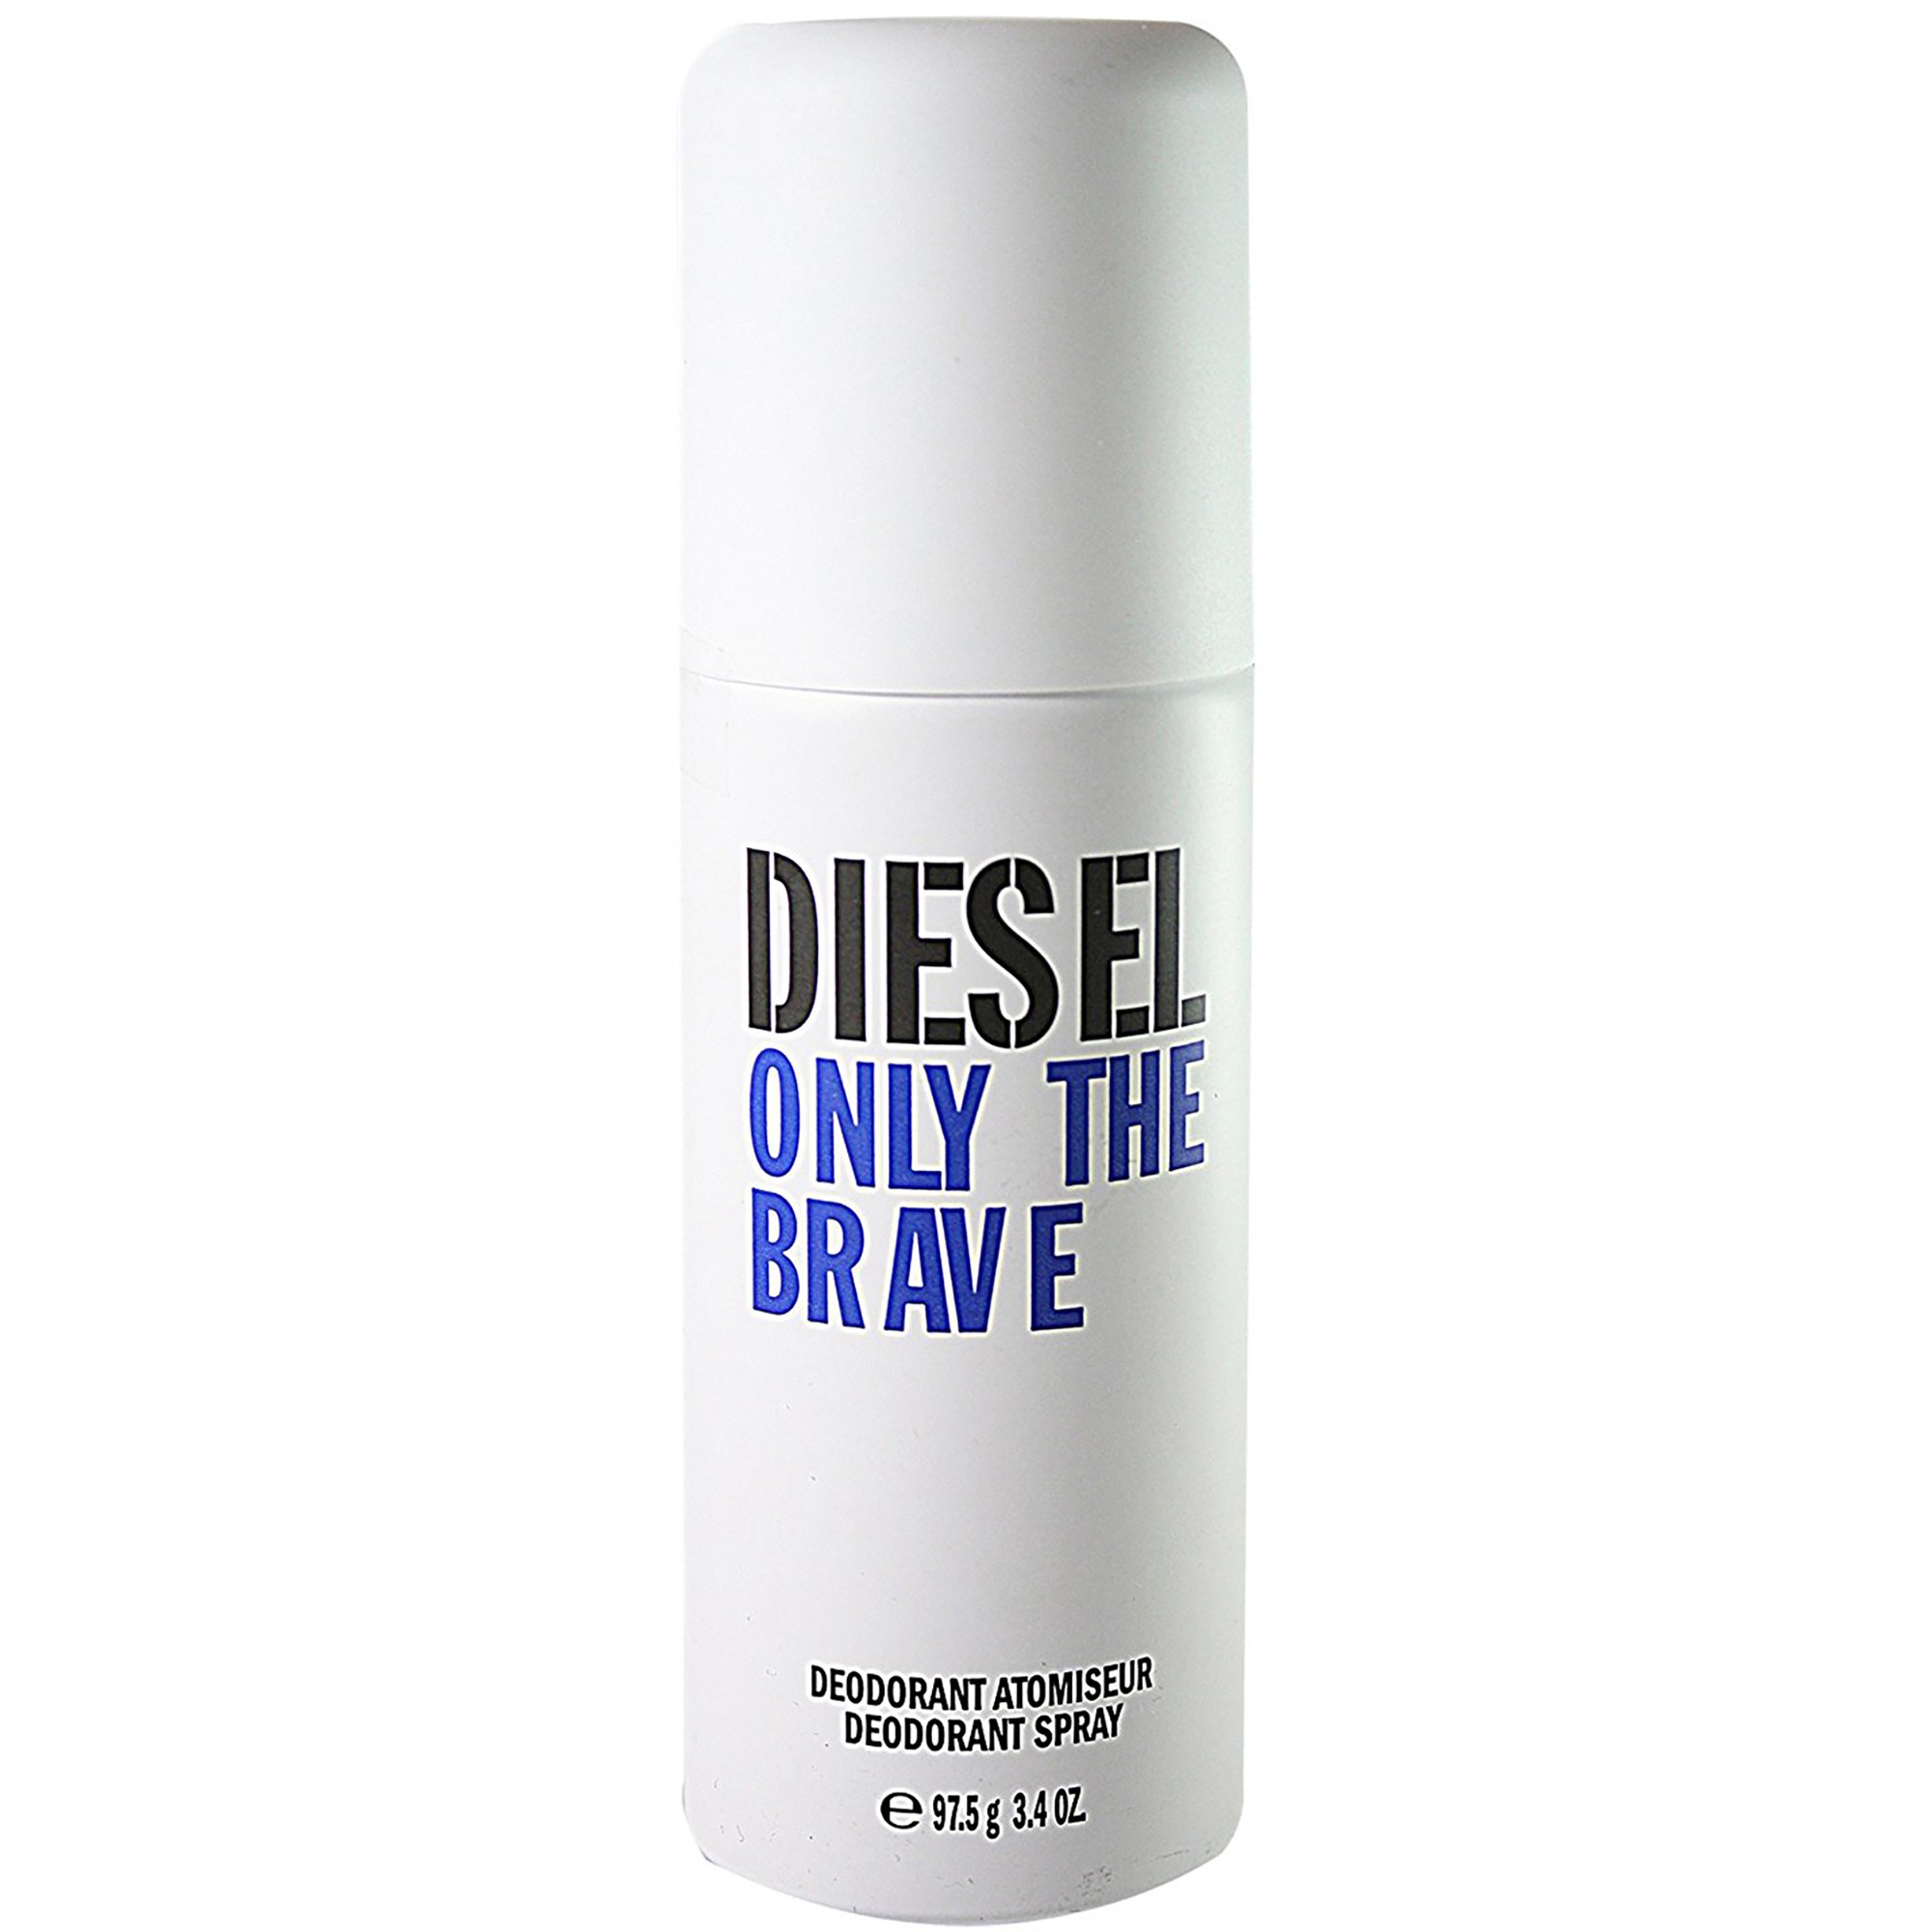 Diesel Only The Brave Deo Spray 150ml